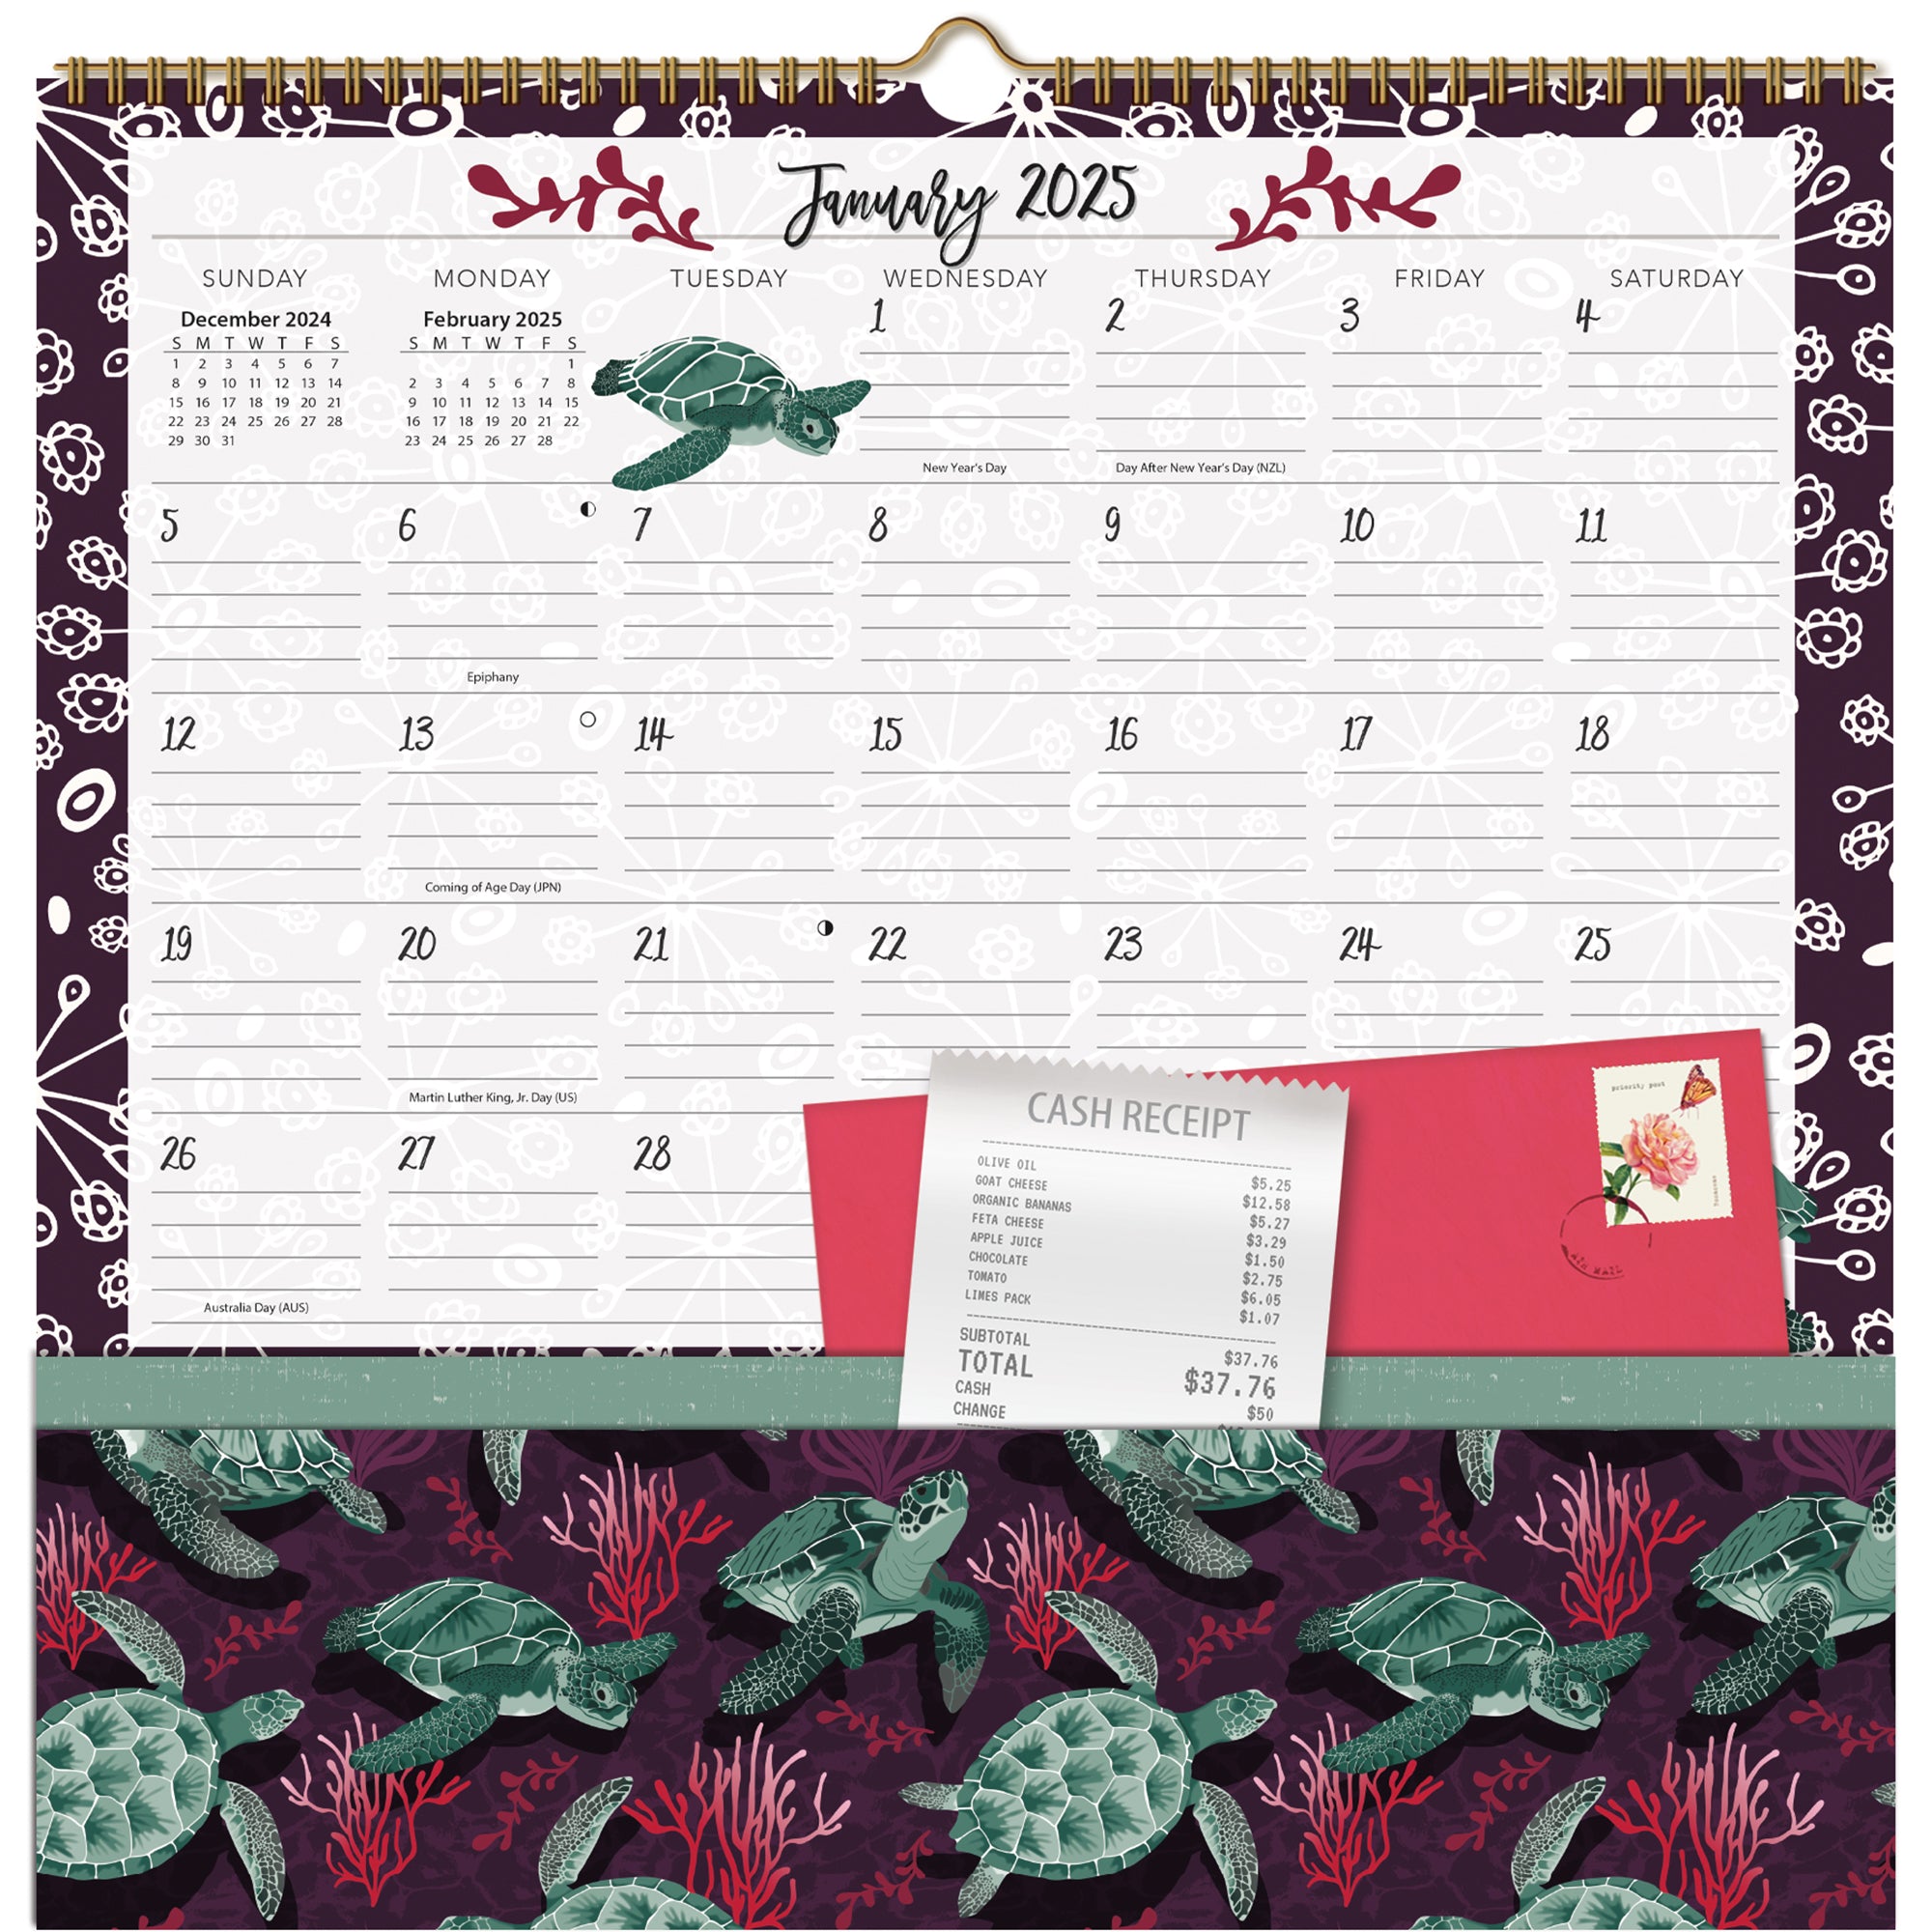 2025 Flora & Fauna - LANG Note Nook Square Wall Calendar